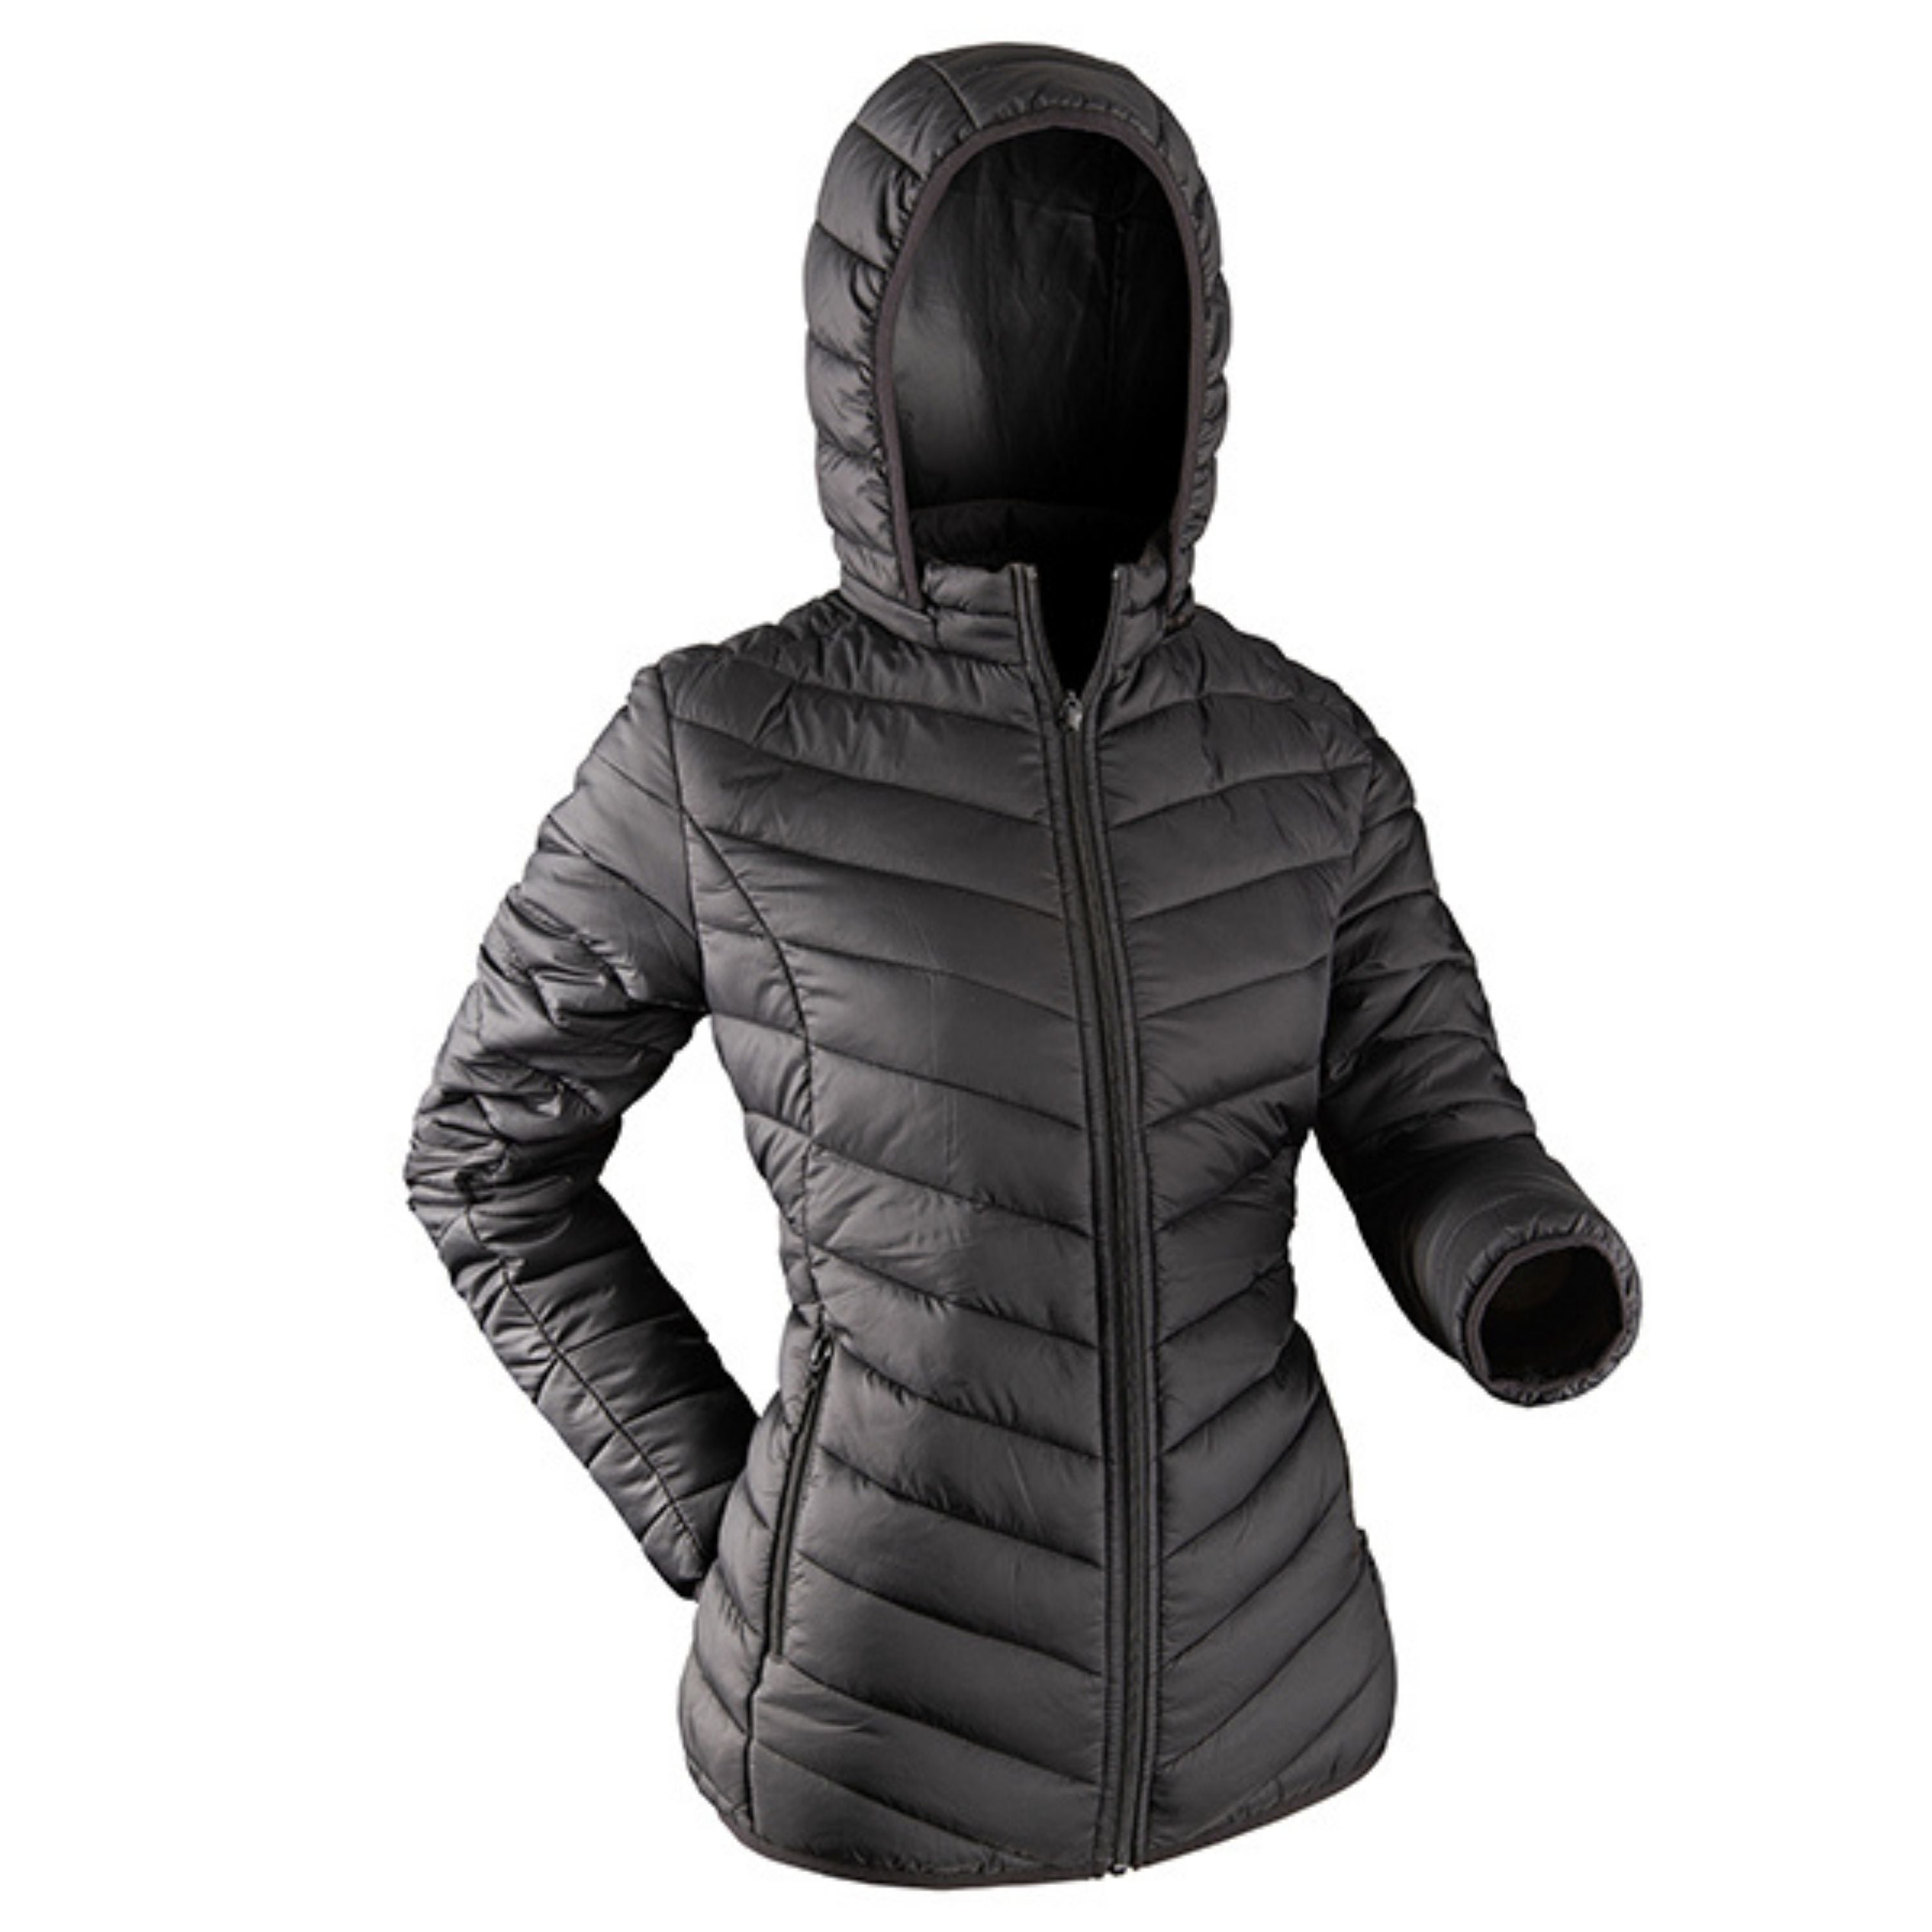 Travelex Insulated jacket with hood- Women's